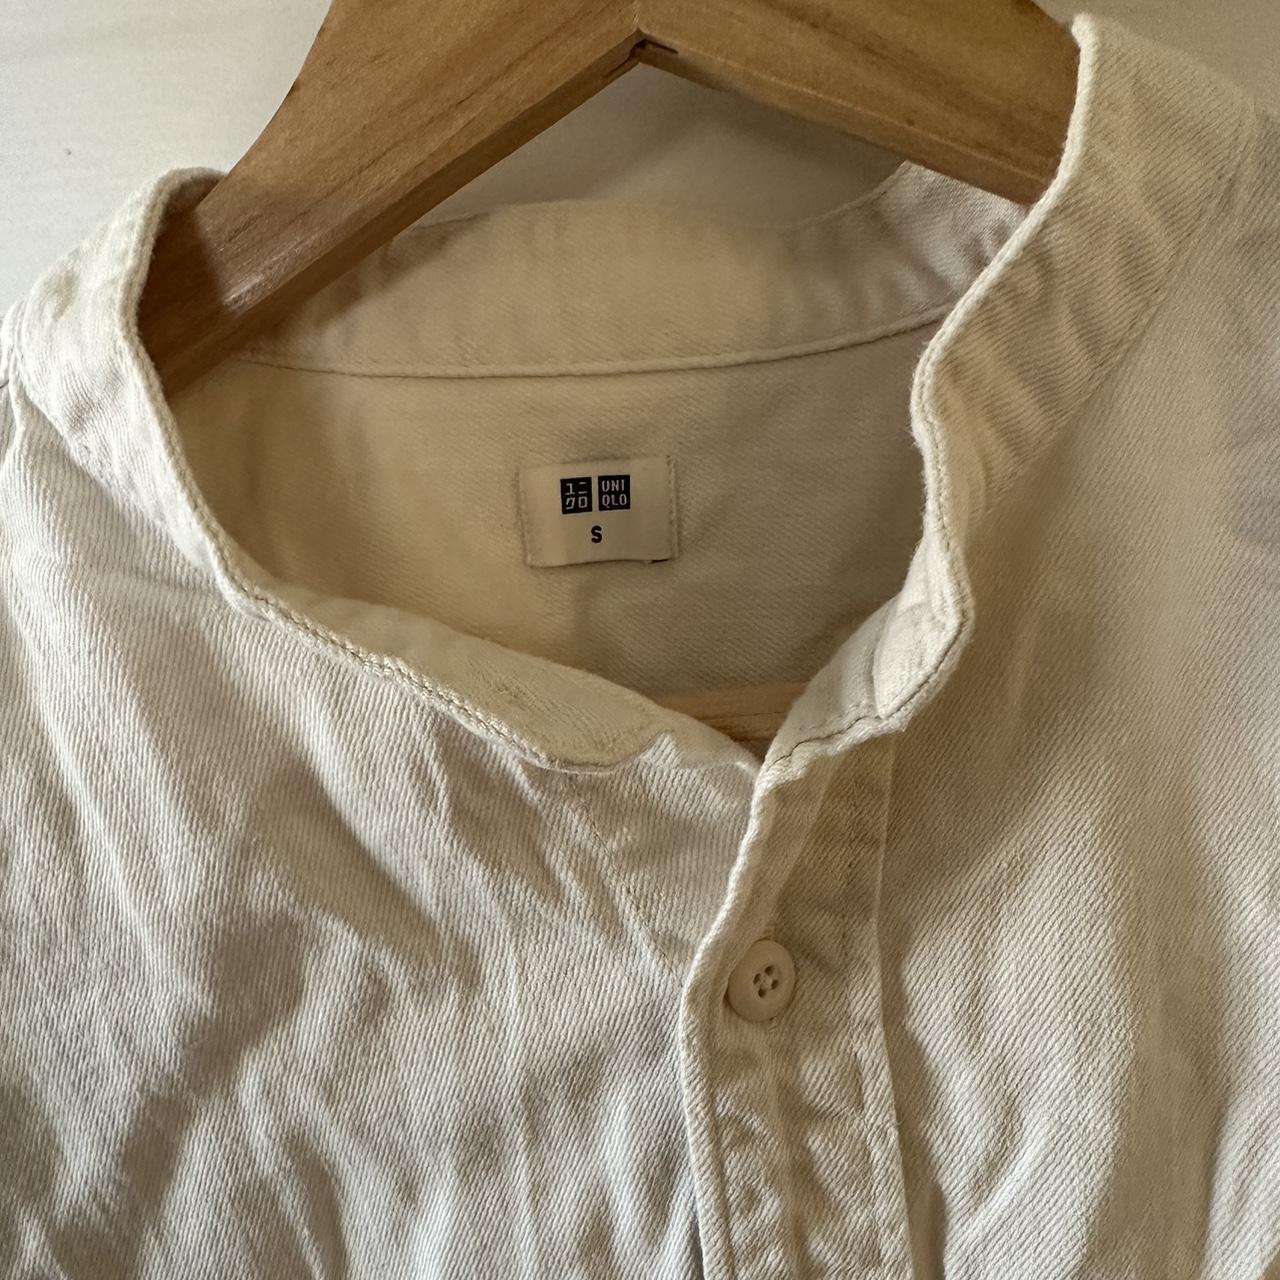 Uniqlo Mao Collar Shirt Size S Perfect Condition - Depop